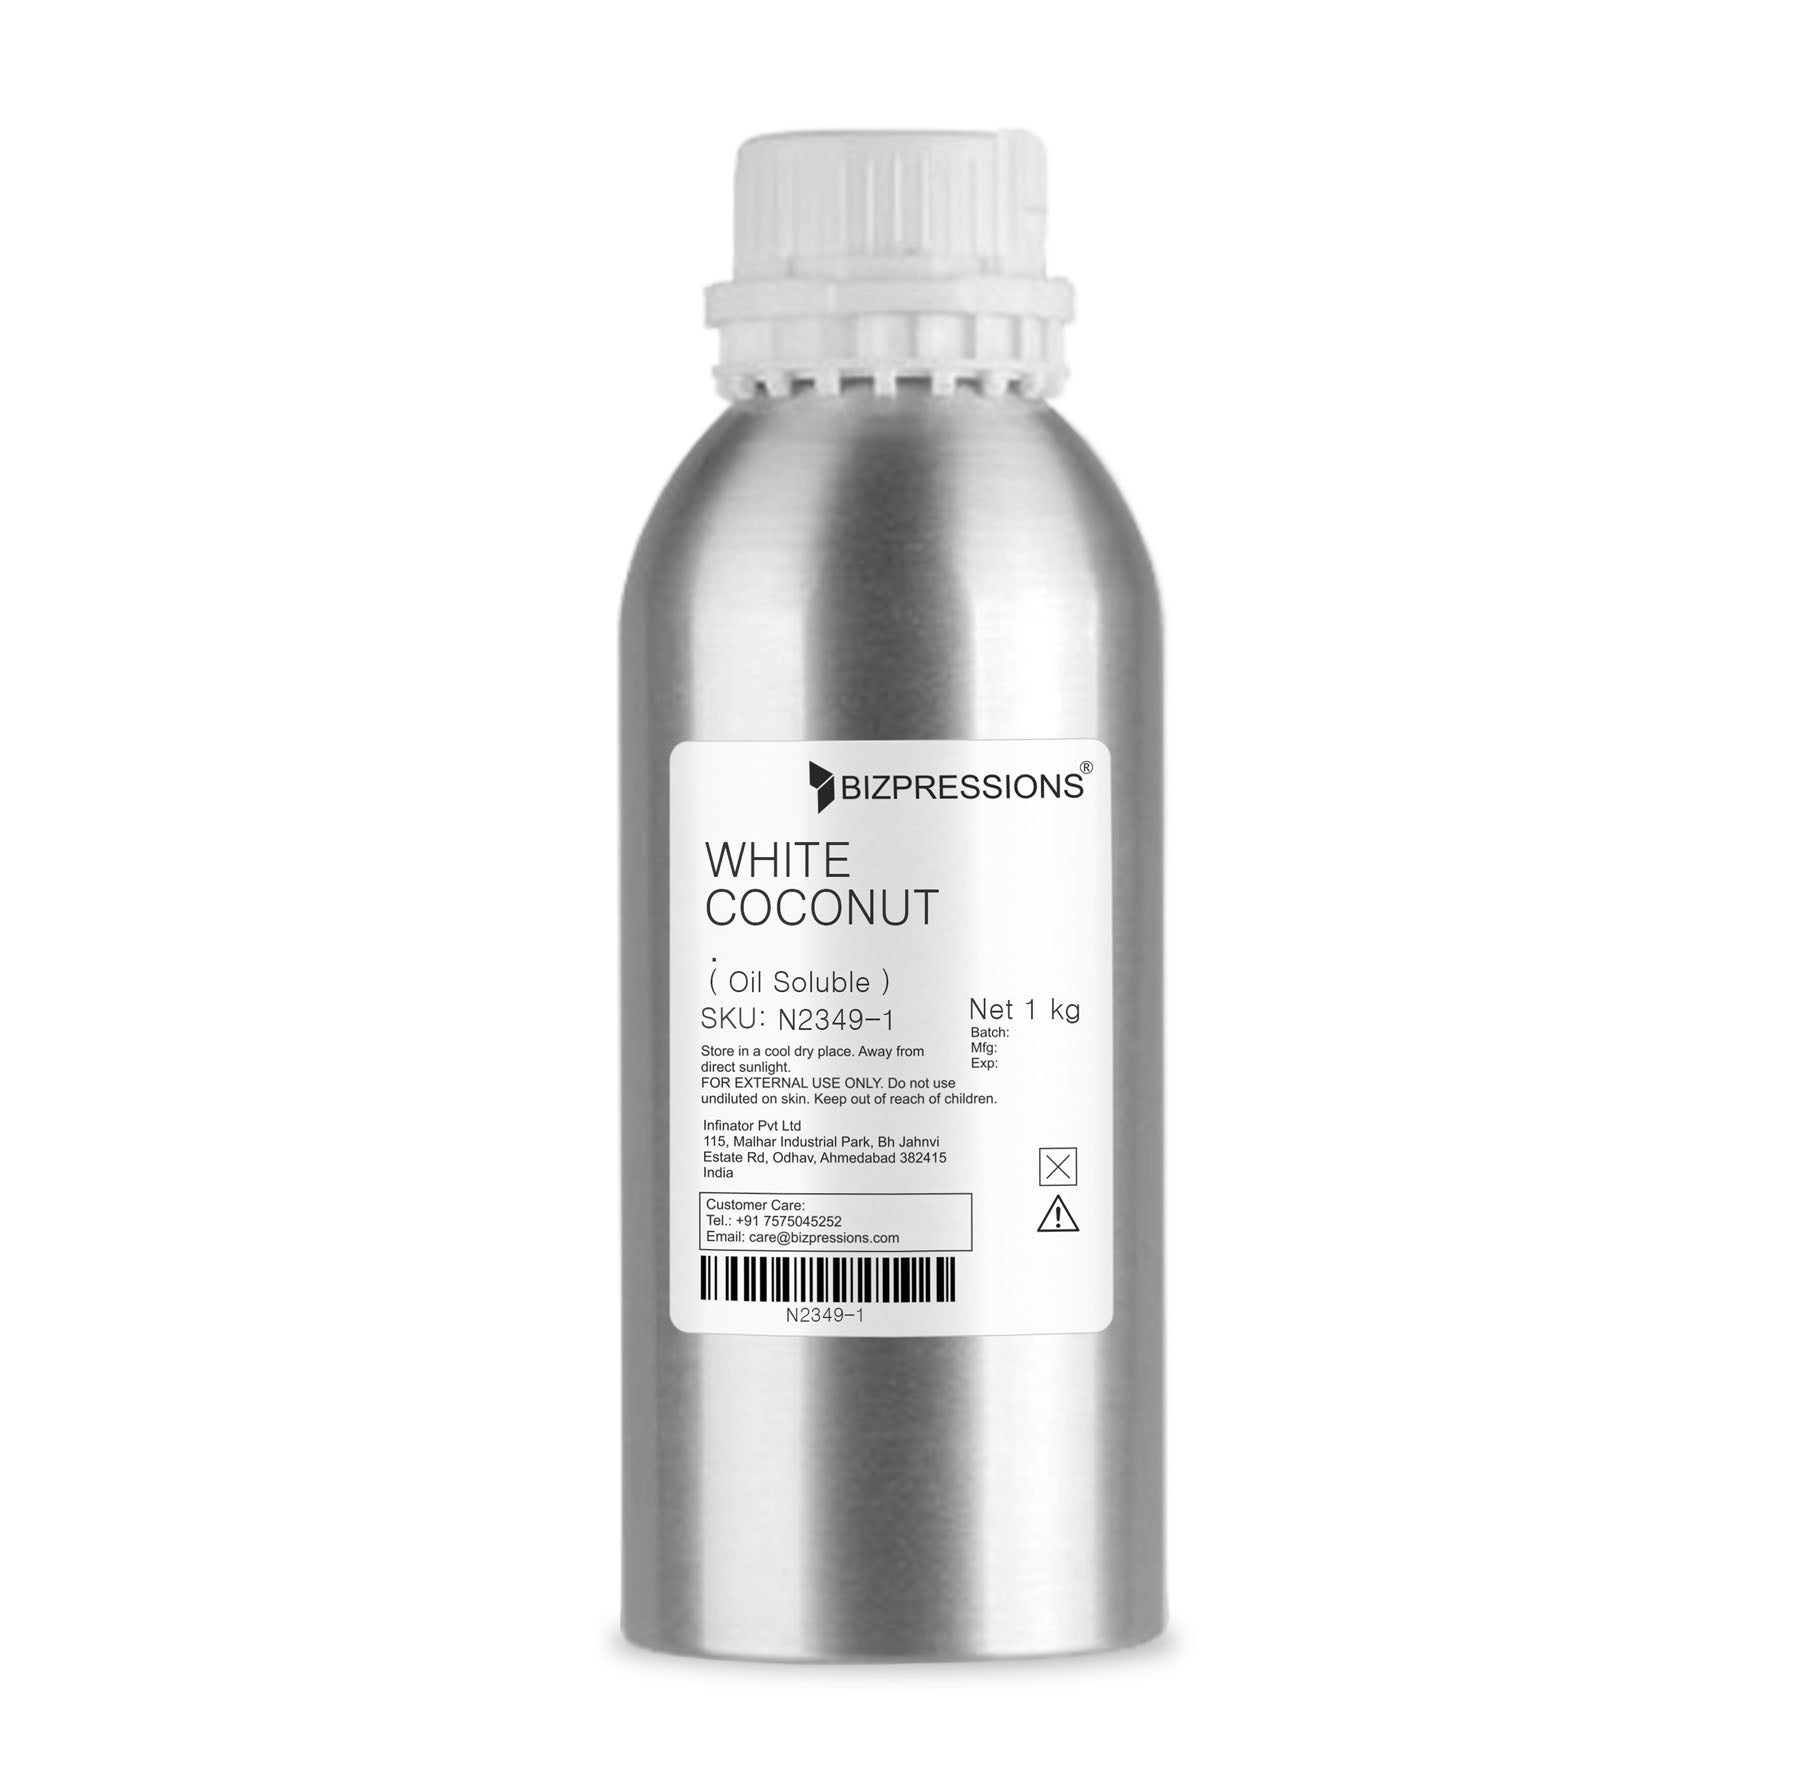 WHITE COCONUT - Fragrance ( Oil Soluble ) - 1 kg